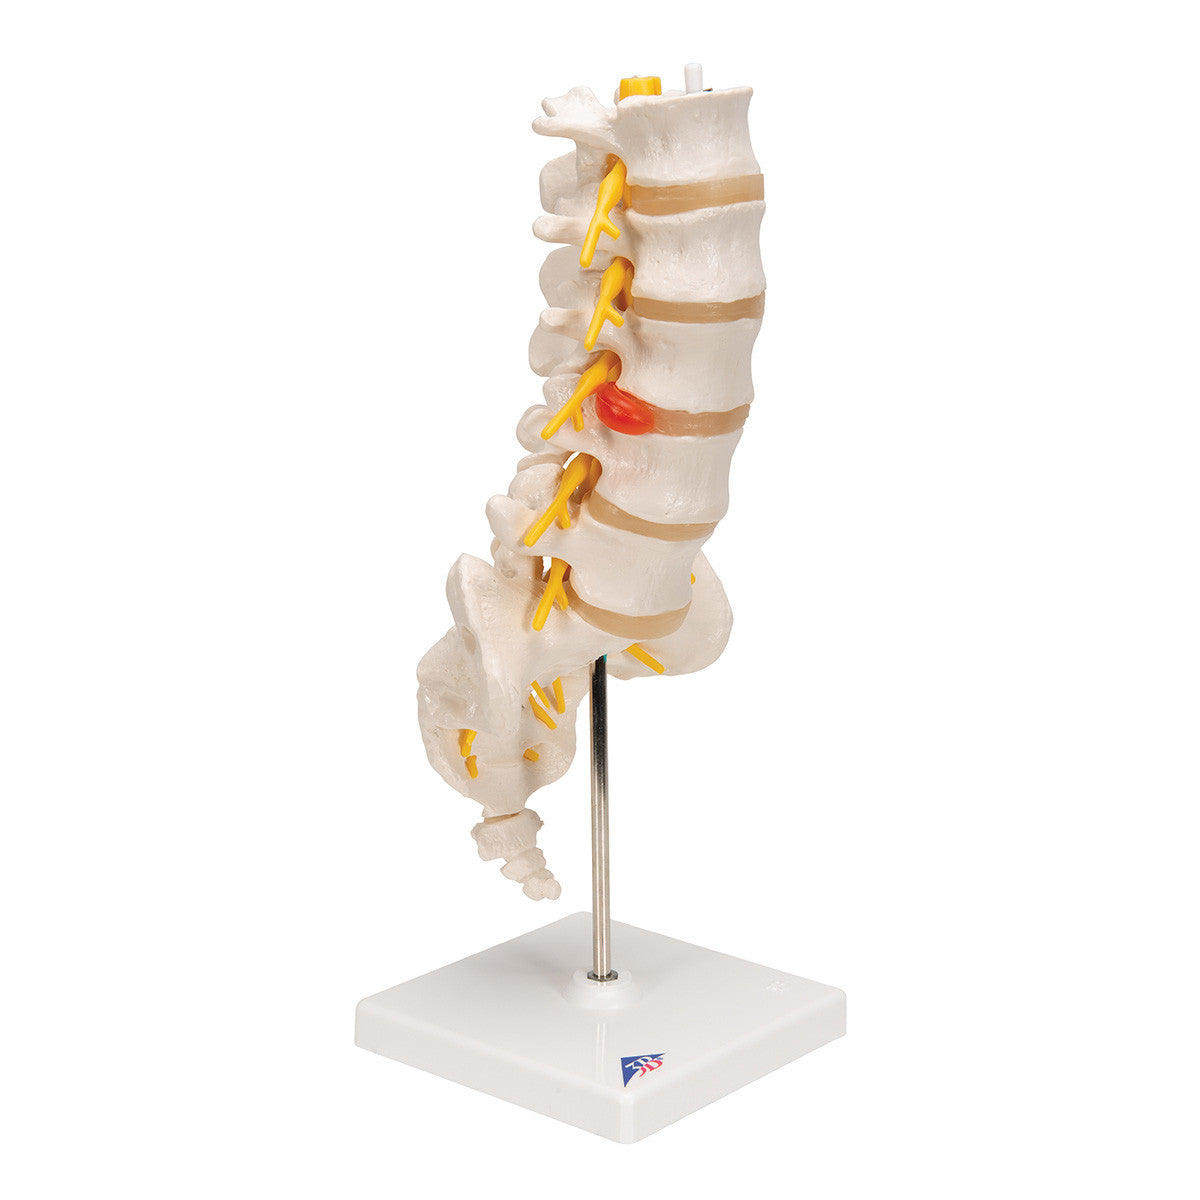 The lumbar model includes a dorso-lateral prolapsed inter-vertebral disc | 3B Scientific A76/5